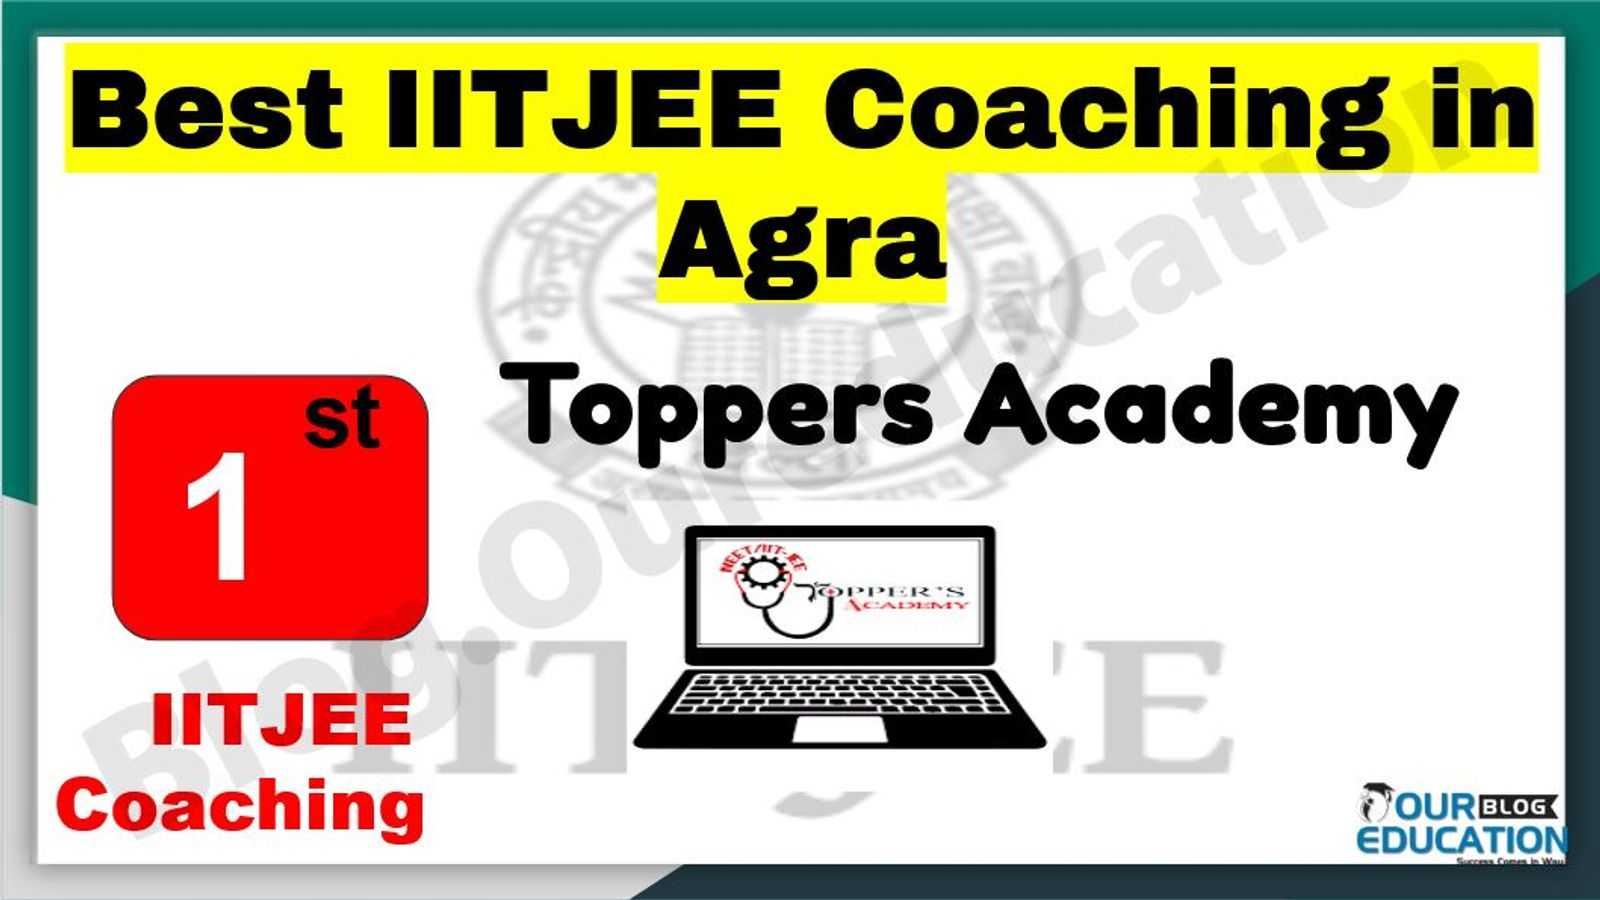 Best IITJEE Coaching in Agra